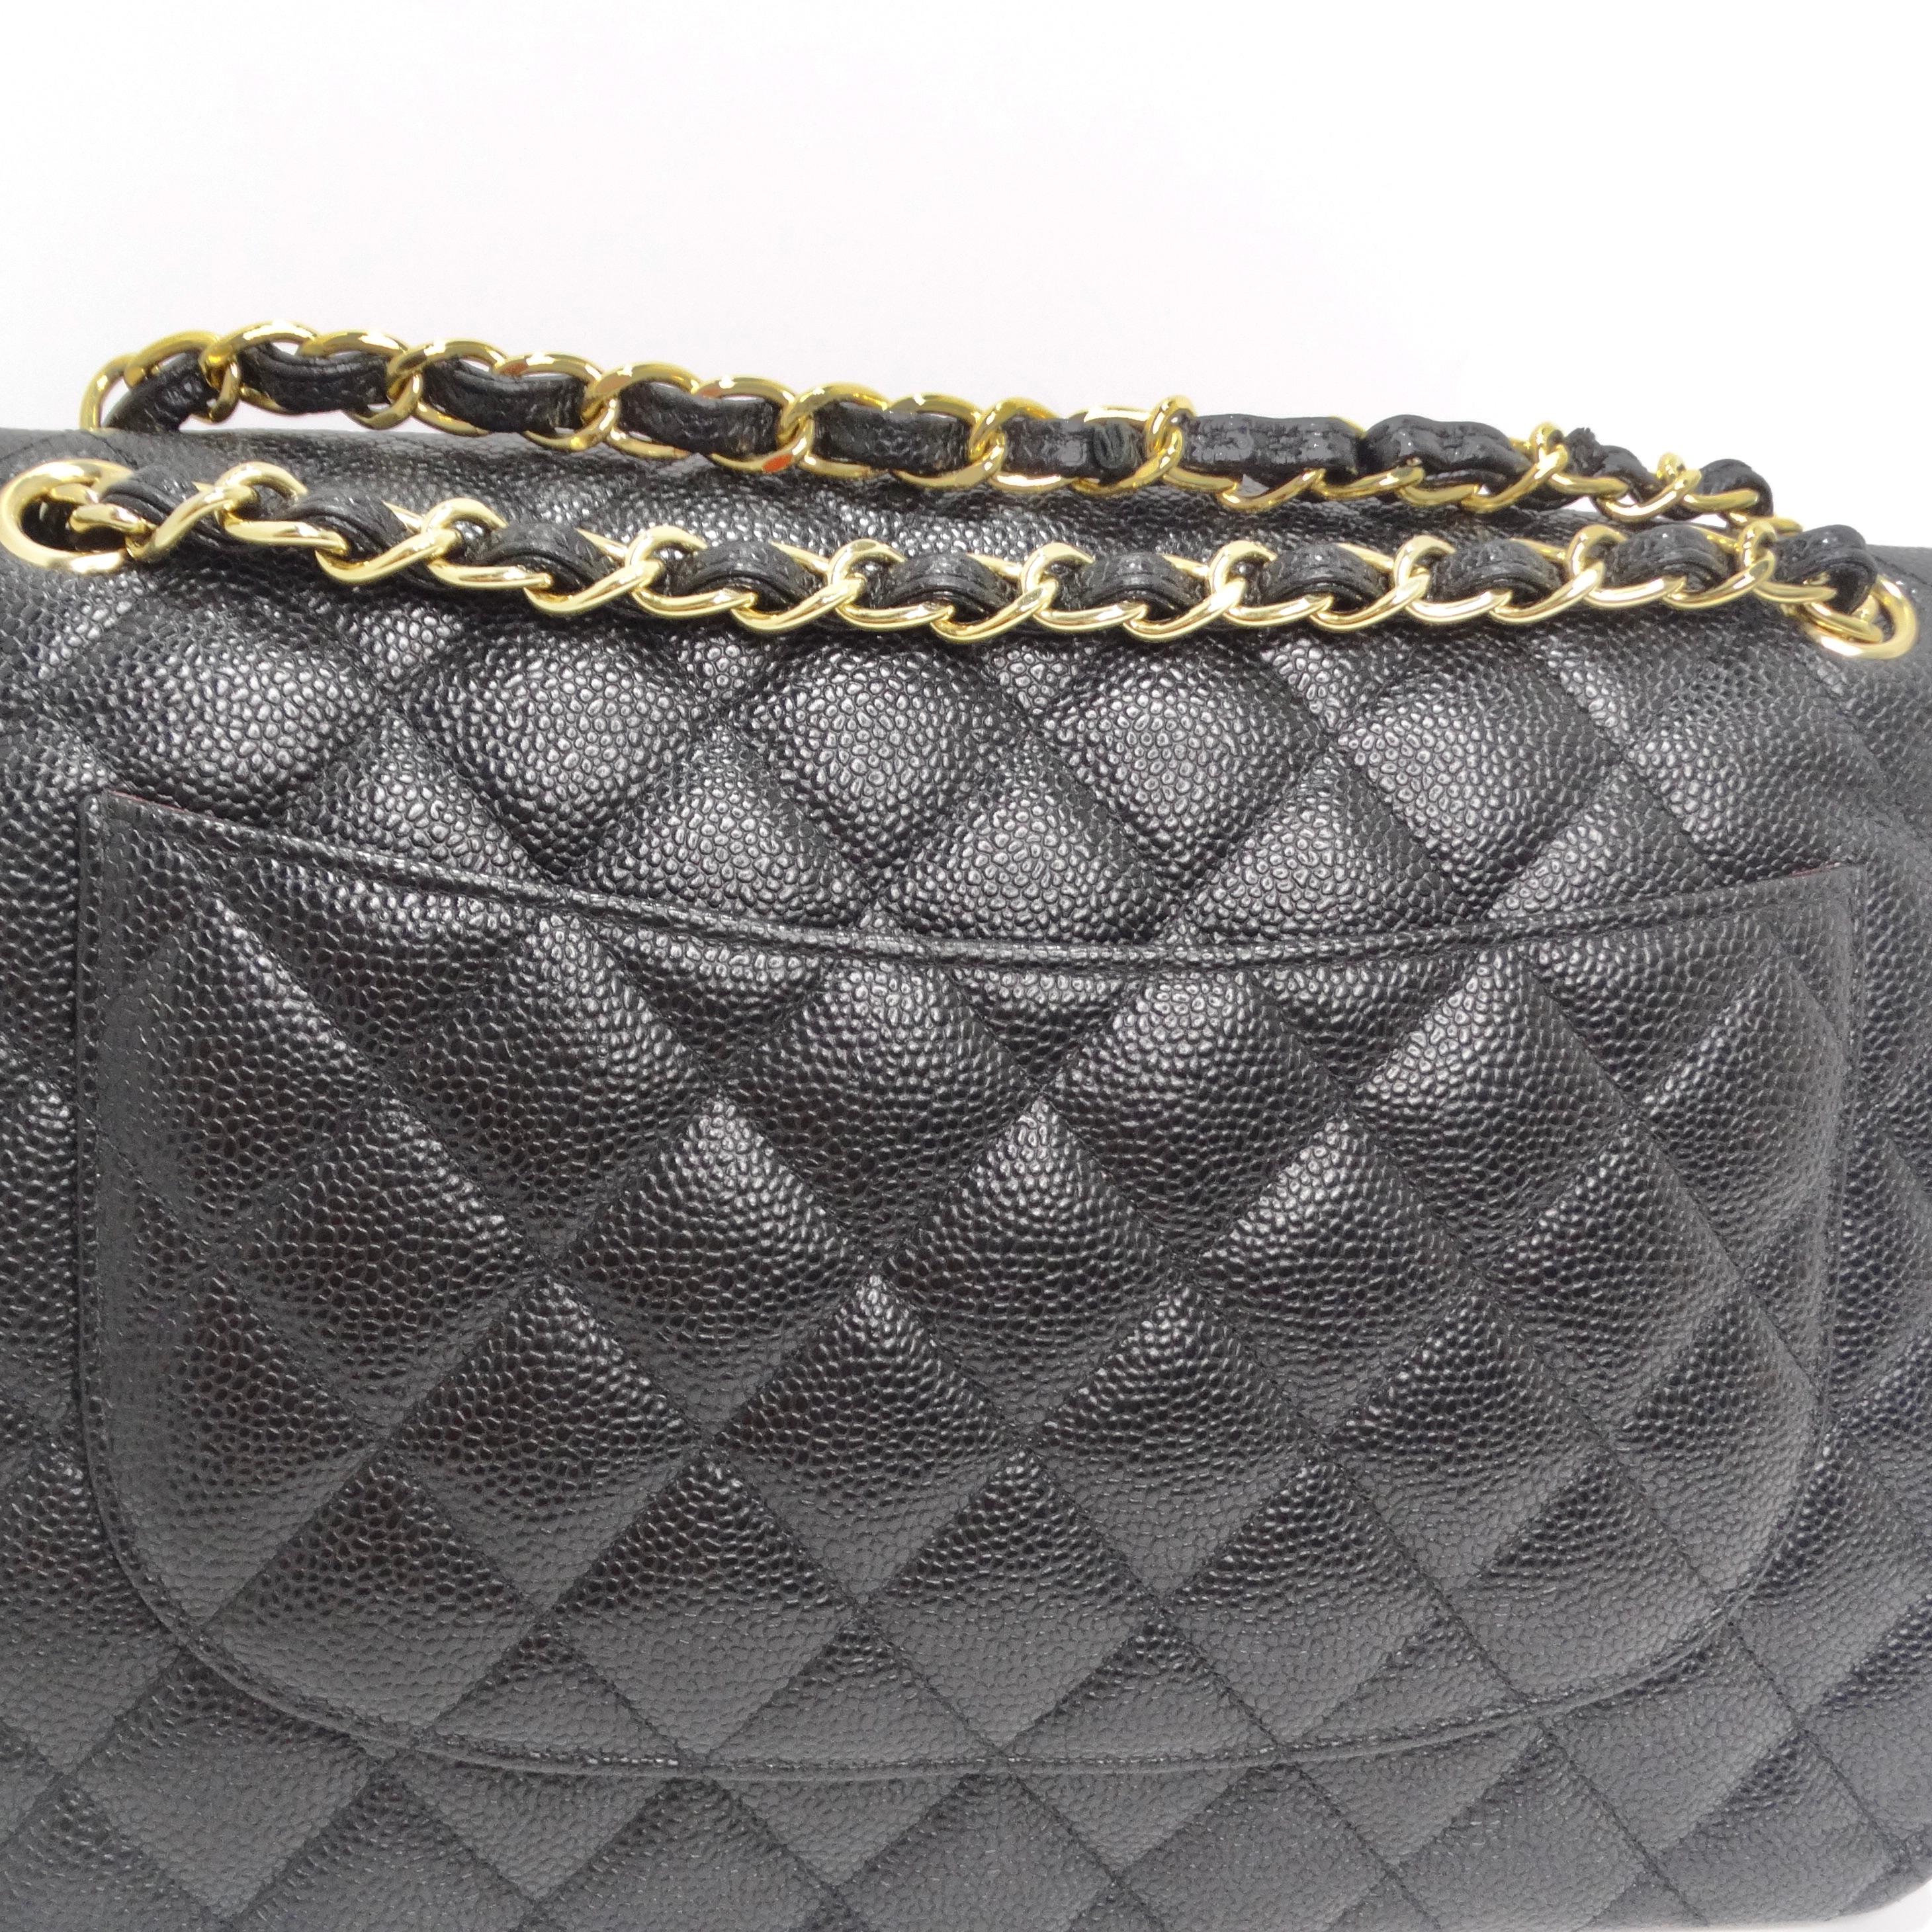 Chanel Large Classic Quilted Caviar Handbag Black/Burgundy 1